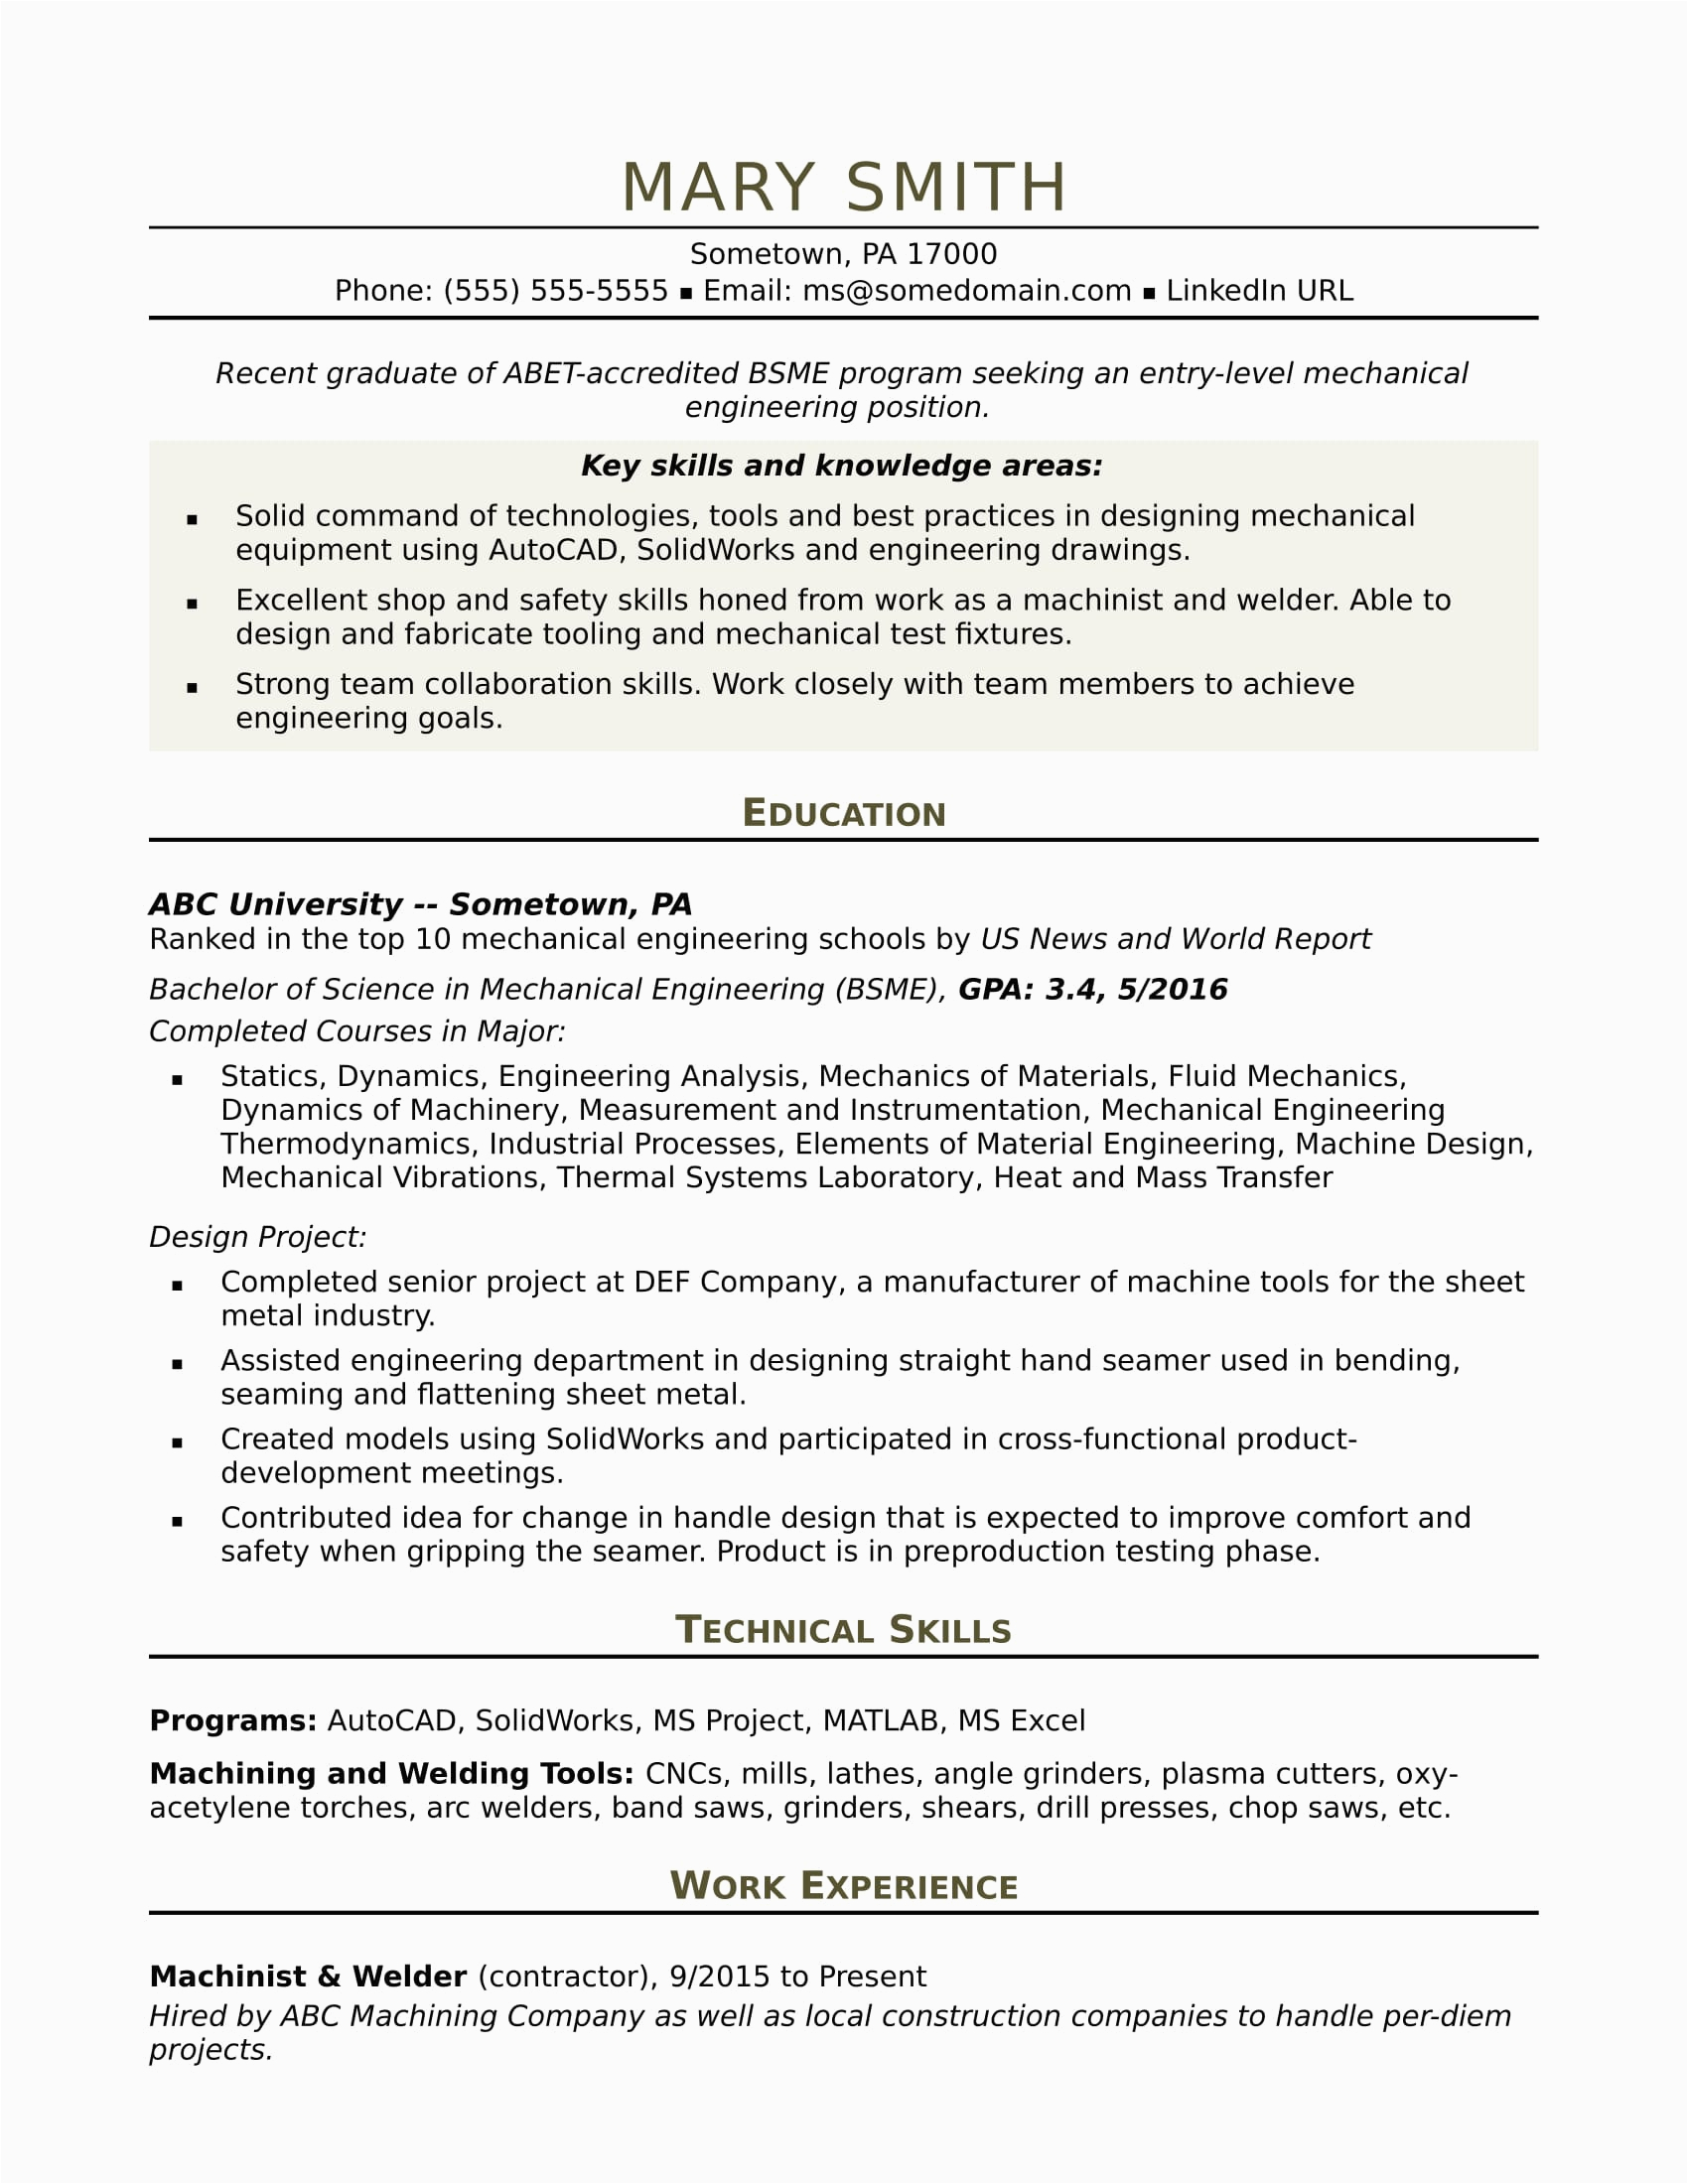 Sample Of Entry Level Engineering Resume Sample Resume for An Entry Level Mechanical Engineer